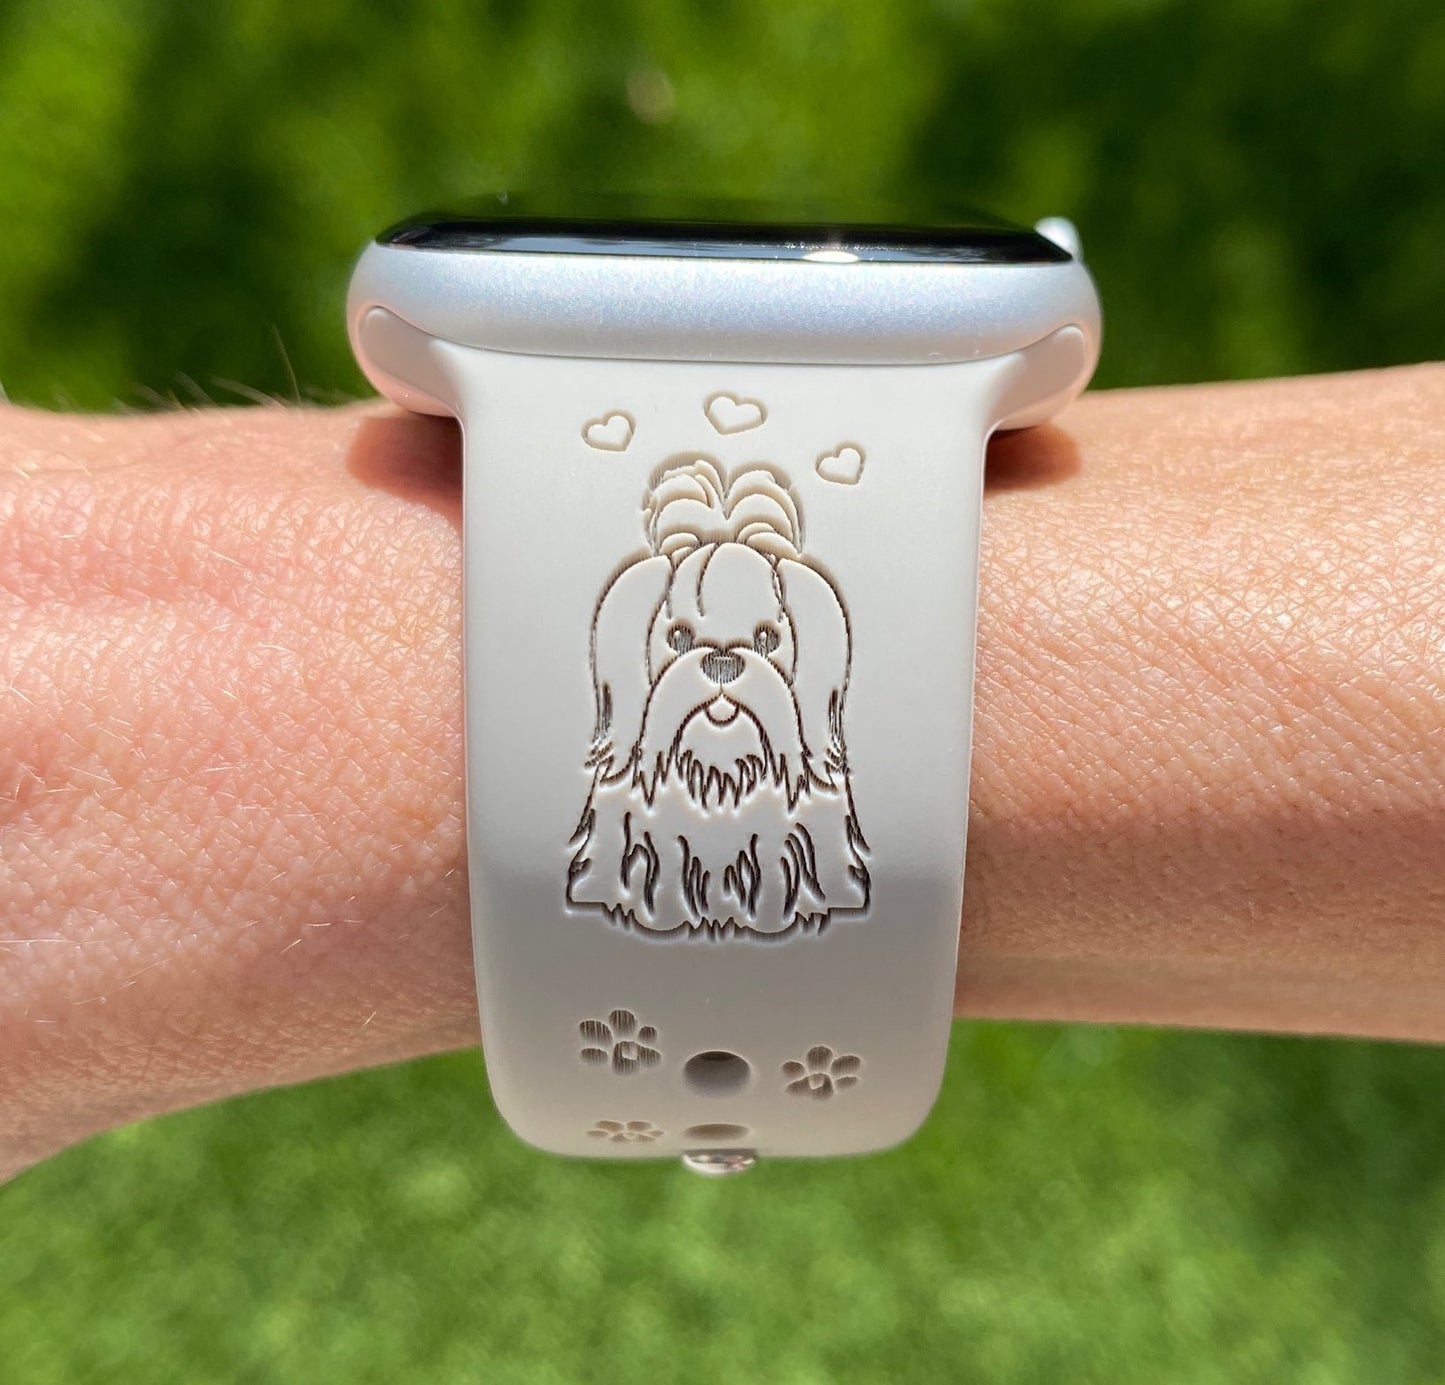 Shih Tzu Dog Apple Watch Band